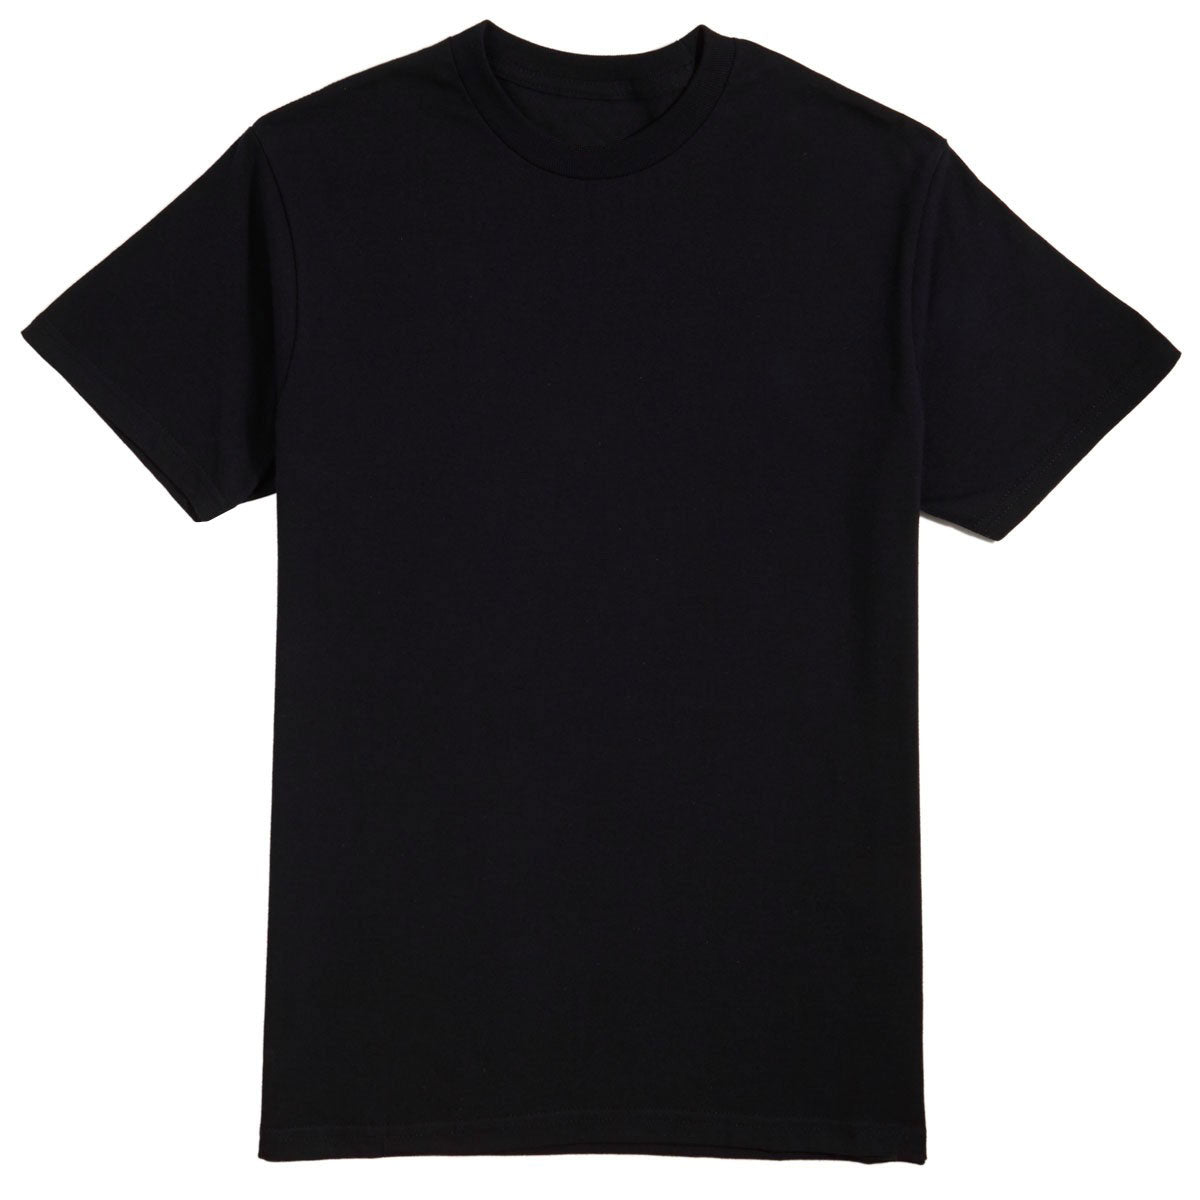 DALL-E AI Generated T-Shirt - Black - XL image 1